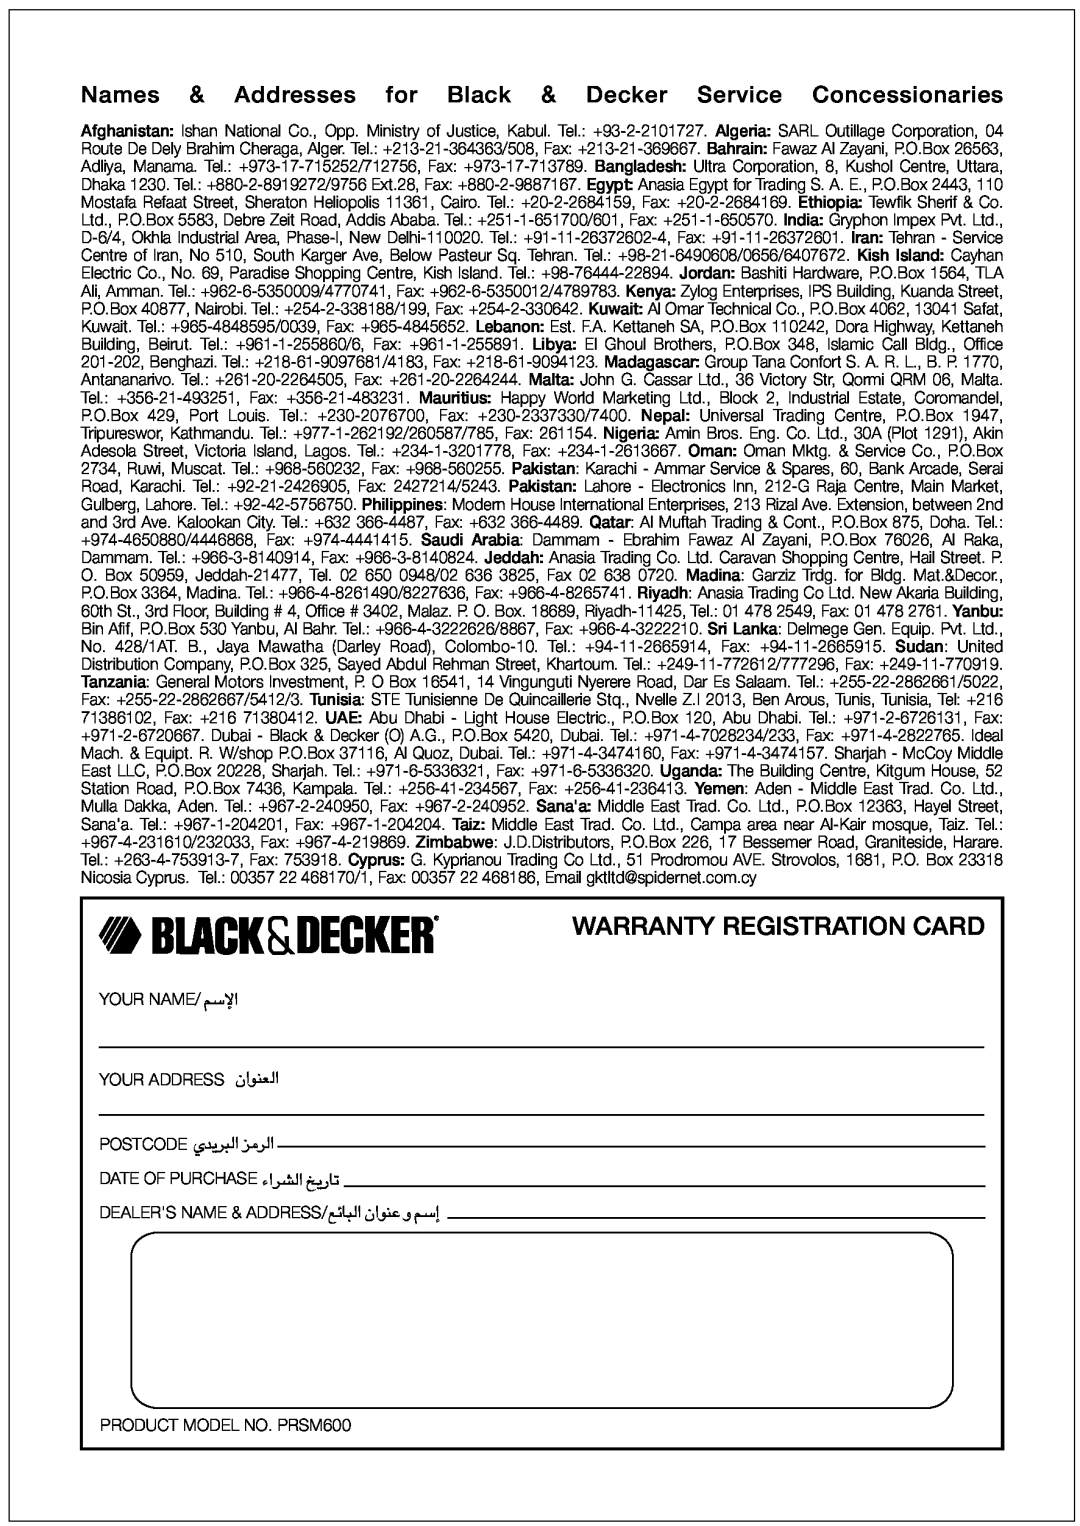 Black & Decker PRSM600 manual Warranty Registration Card, «ùßr, FMu«Ê∞«, Uzl∞∂« ´Mu«Ê Ë ßr≈ 